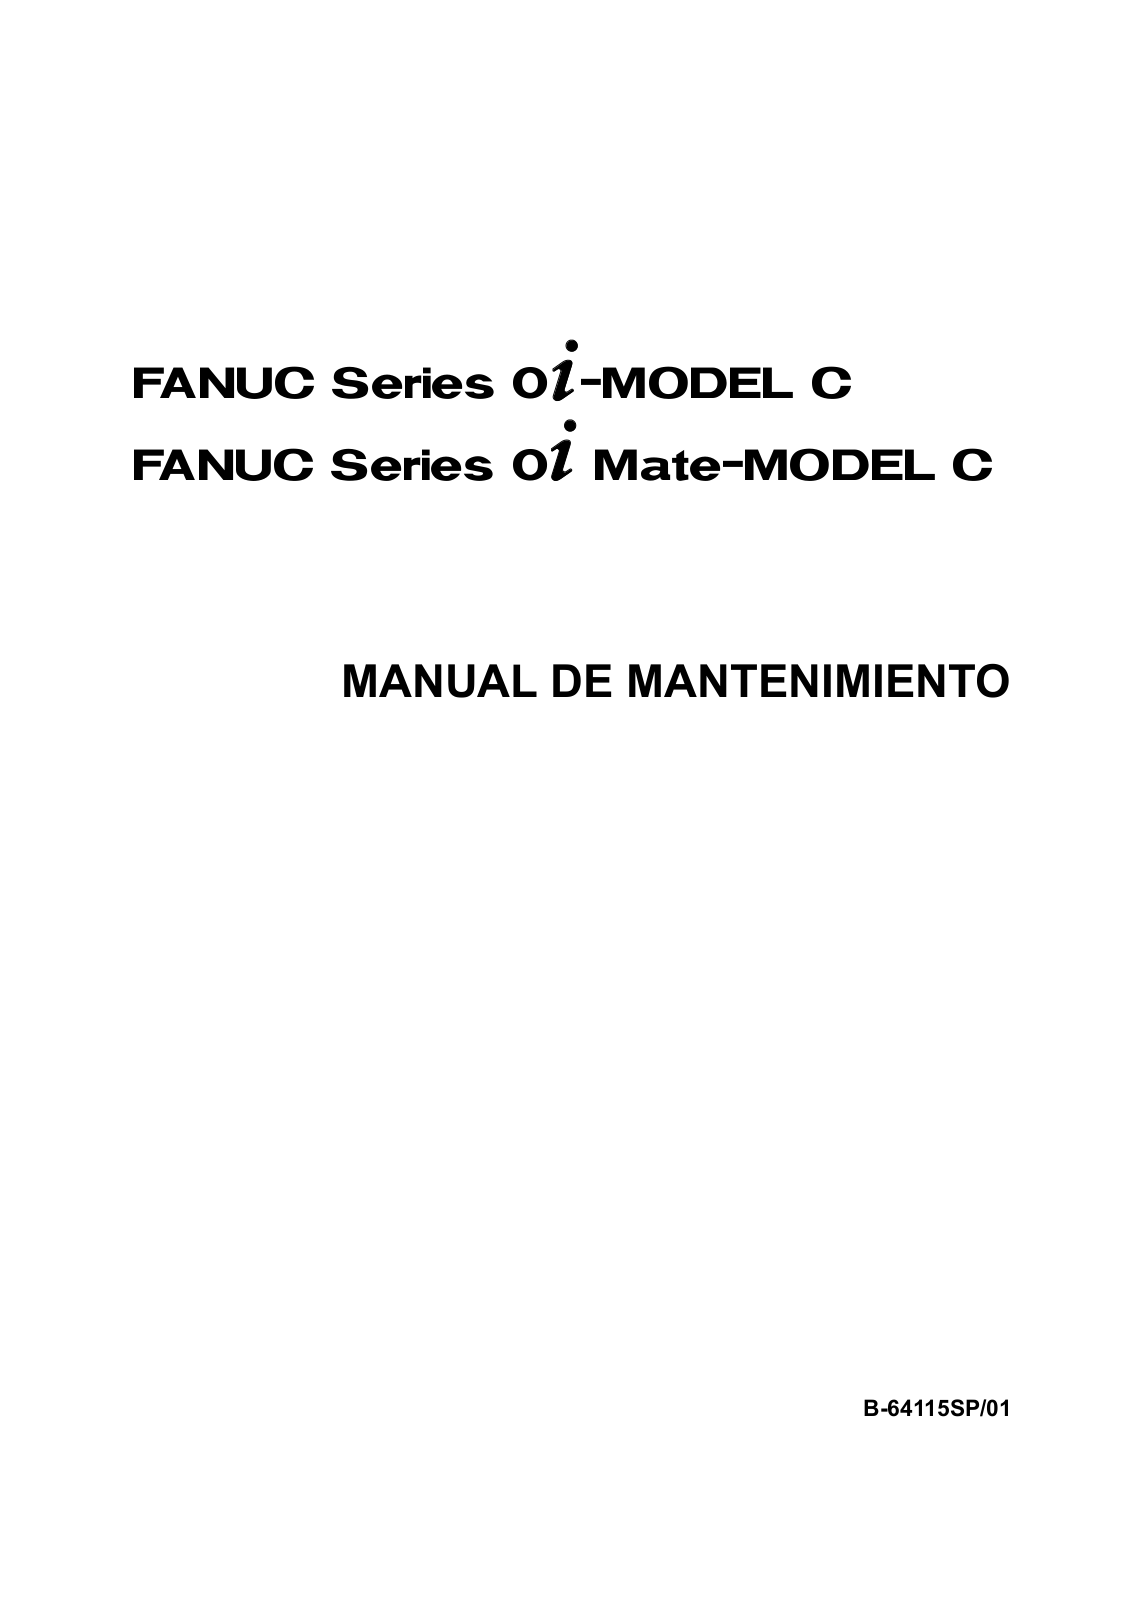 FANUC Series 0i-MODEL C, Series 0i Mate-MODEL C MAINTENANCE MANUAL